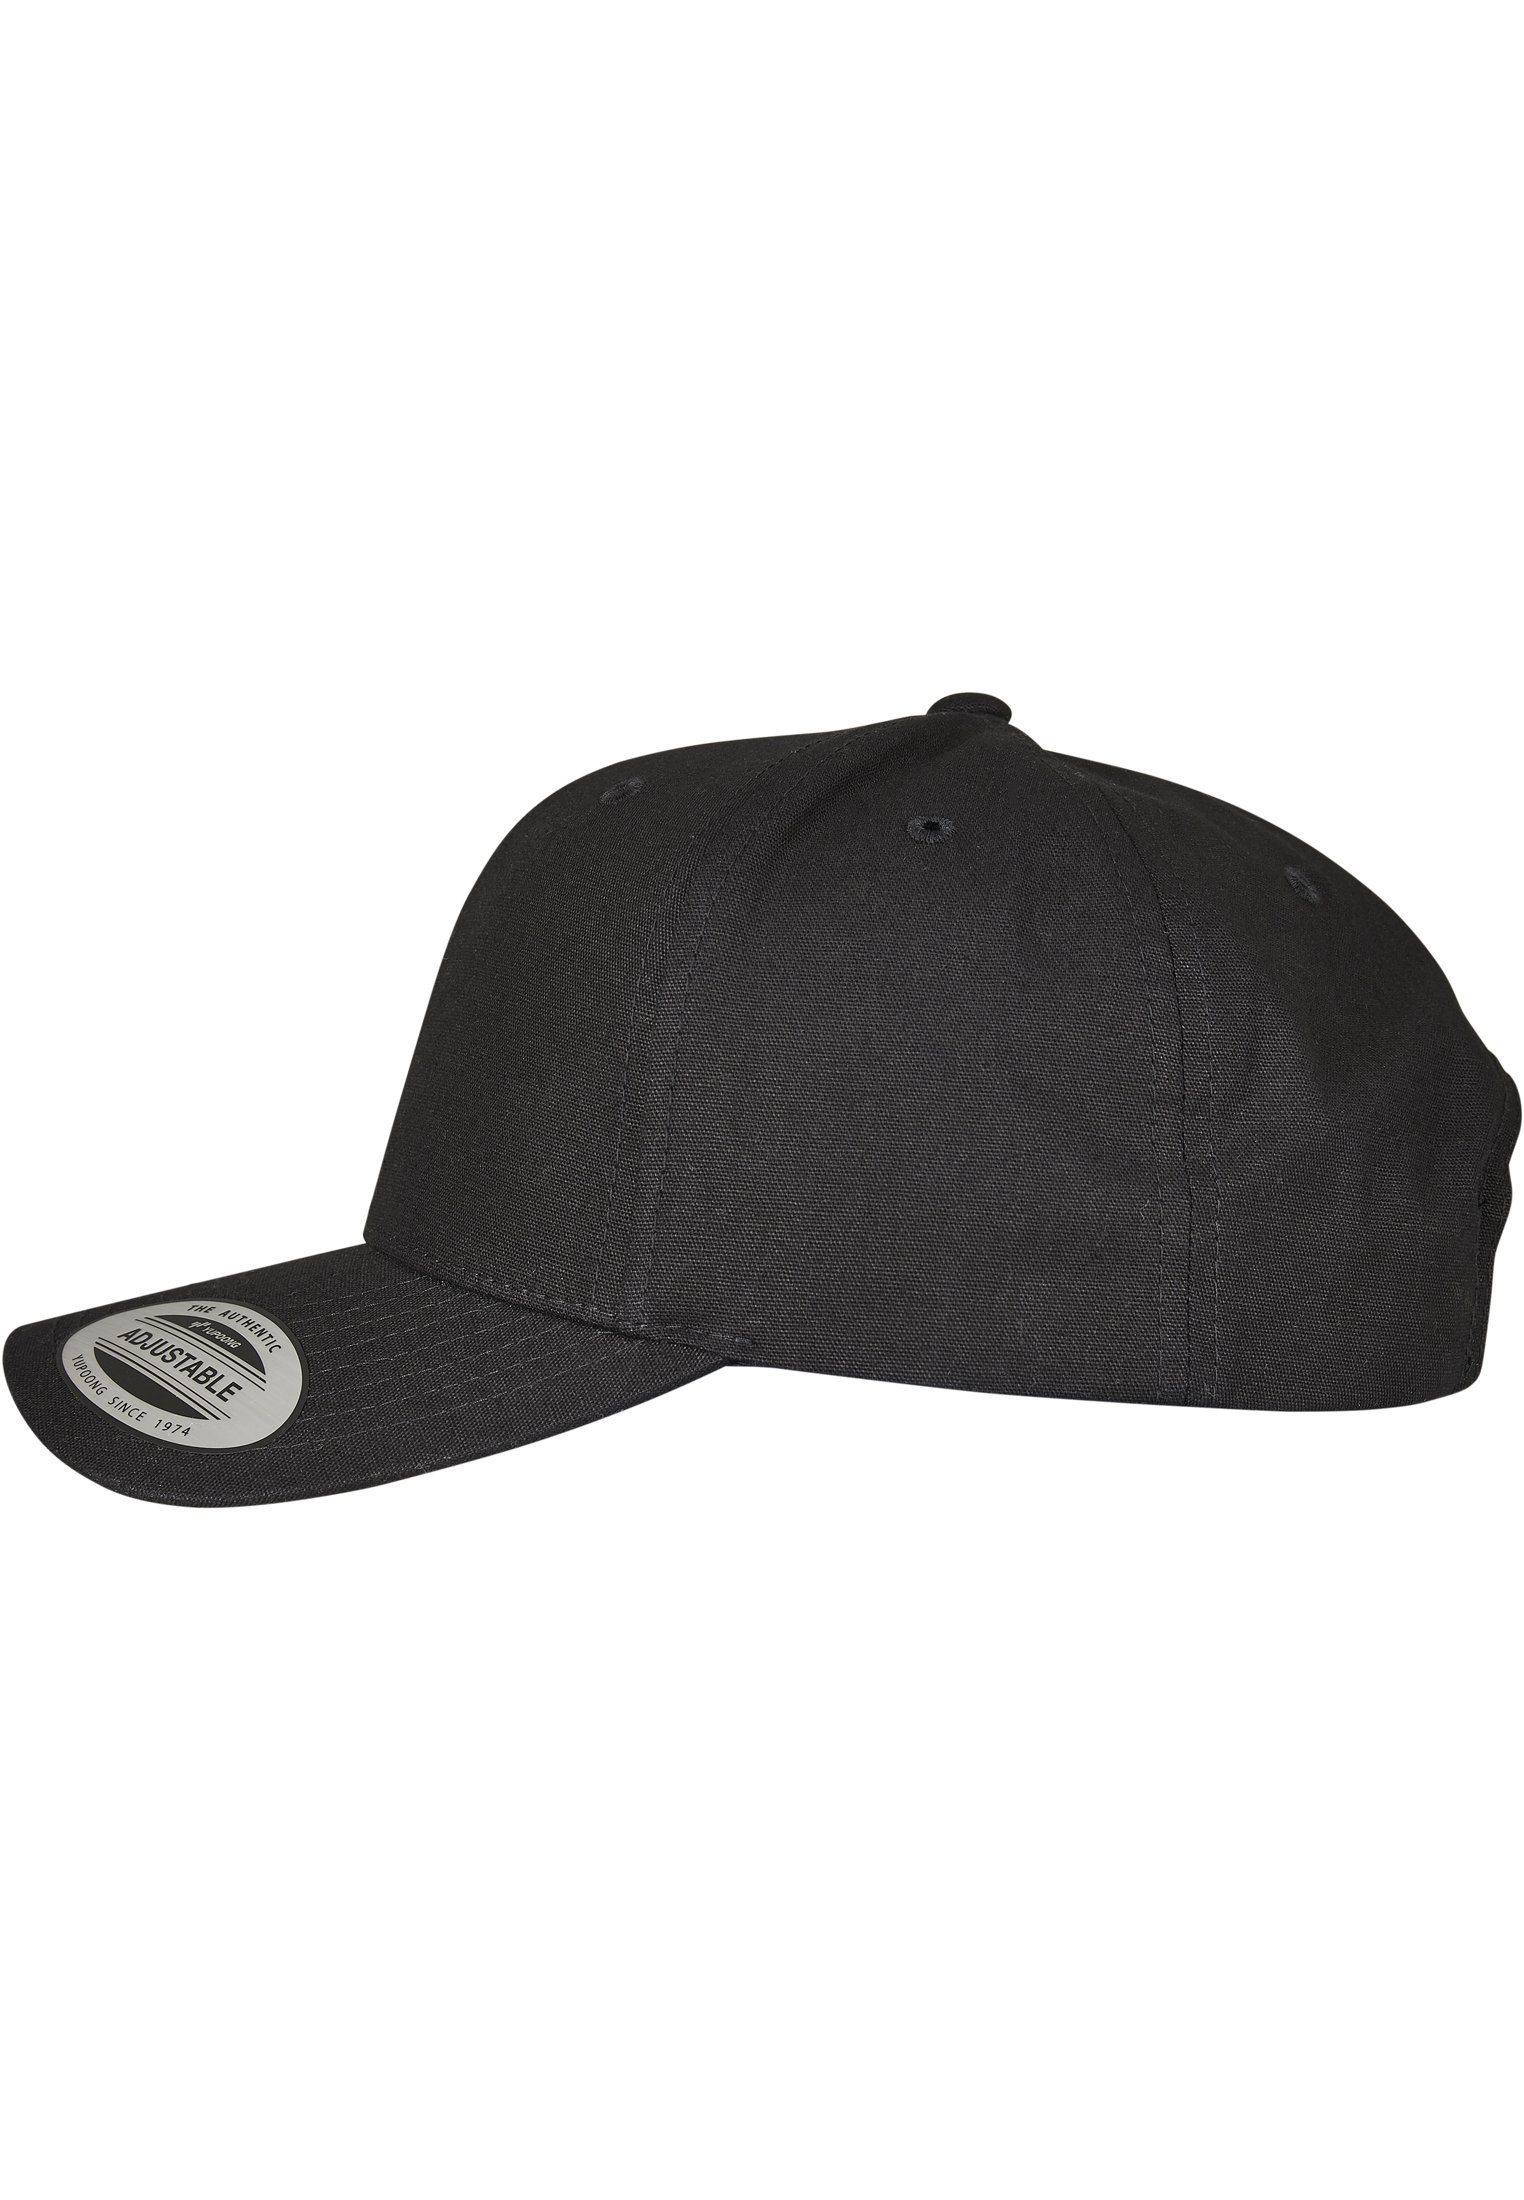 Flexfit Flex Snapback Snap black Curved Cap Metal 6-Panel